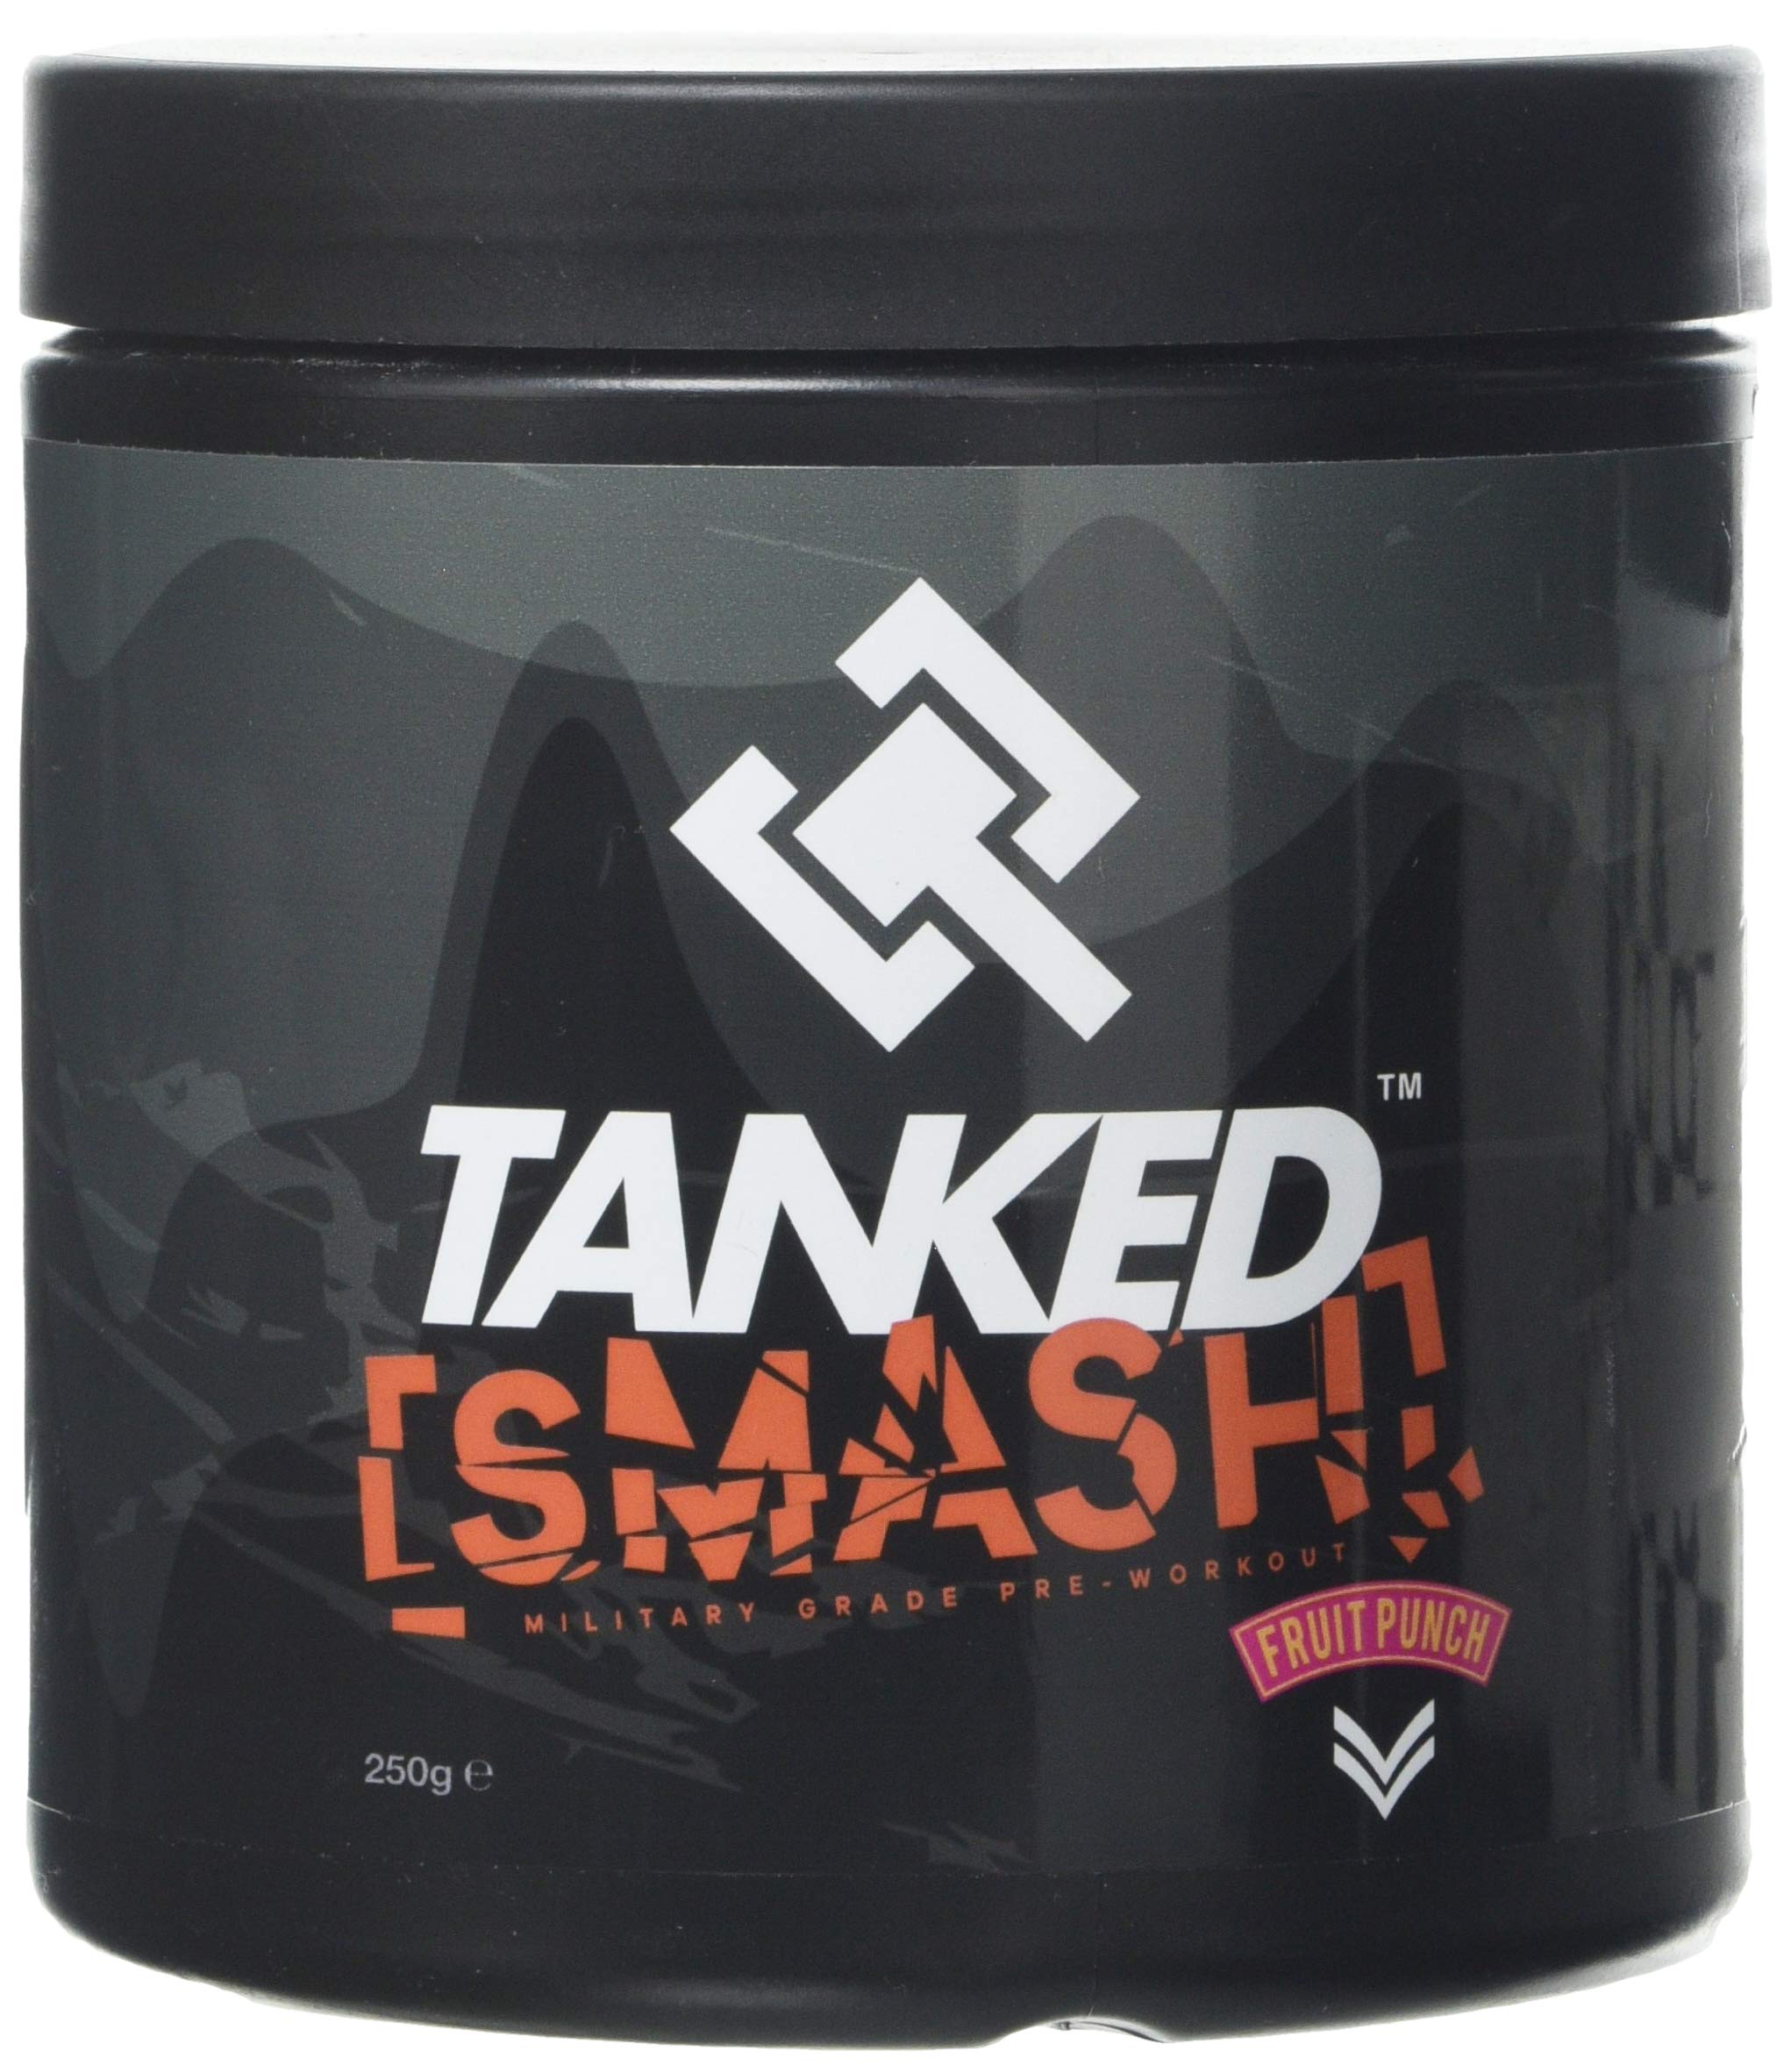 Tanked Smash Pre Workout Powder 250g - Improve Focus & Intensity Levels - Fruit Punch | Tanked